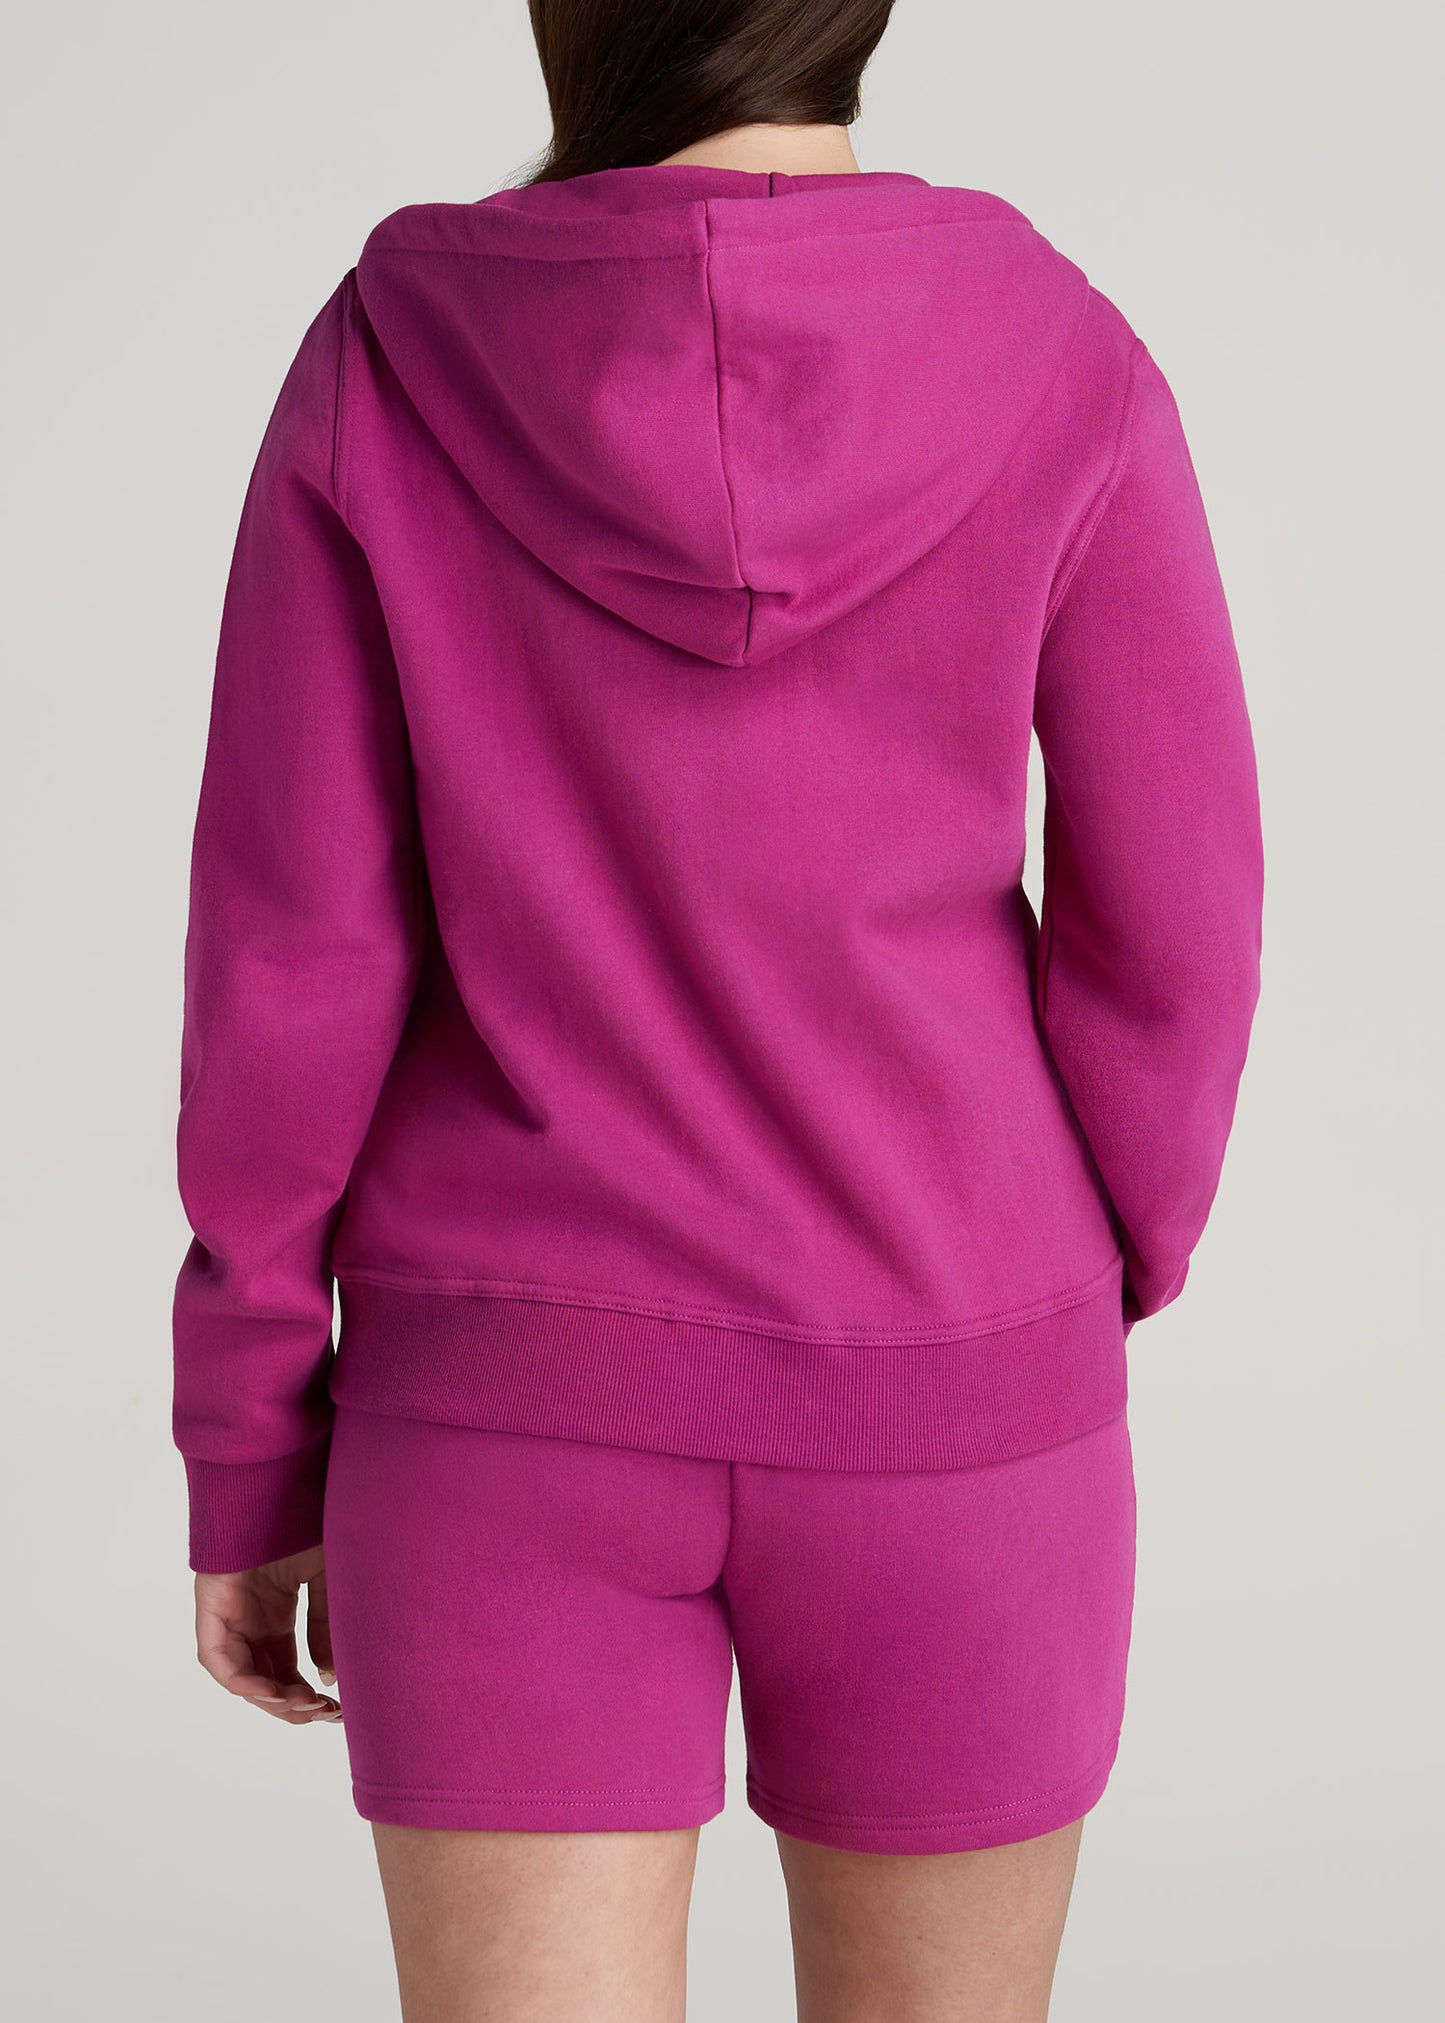 True Face Ladies Hoodie Zip Up Plain Womens Sweatshirt Fleece Full Zipper  Hooded Long Sleeve Zipped Top Hot Pink UK 8 : : Fashion